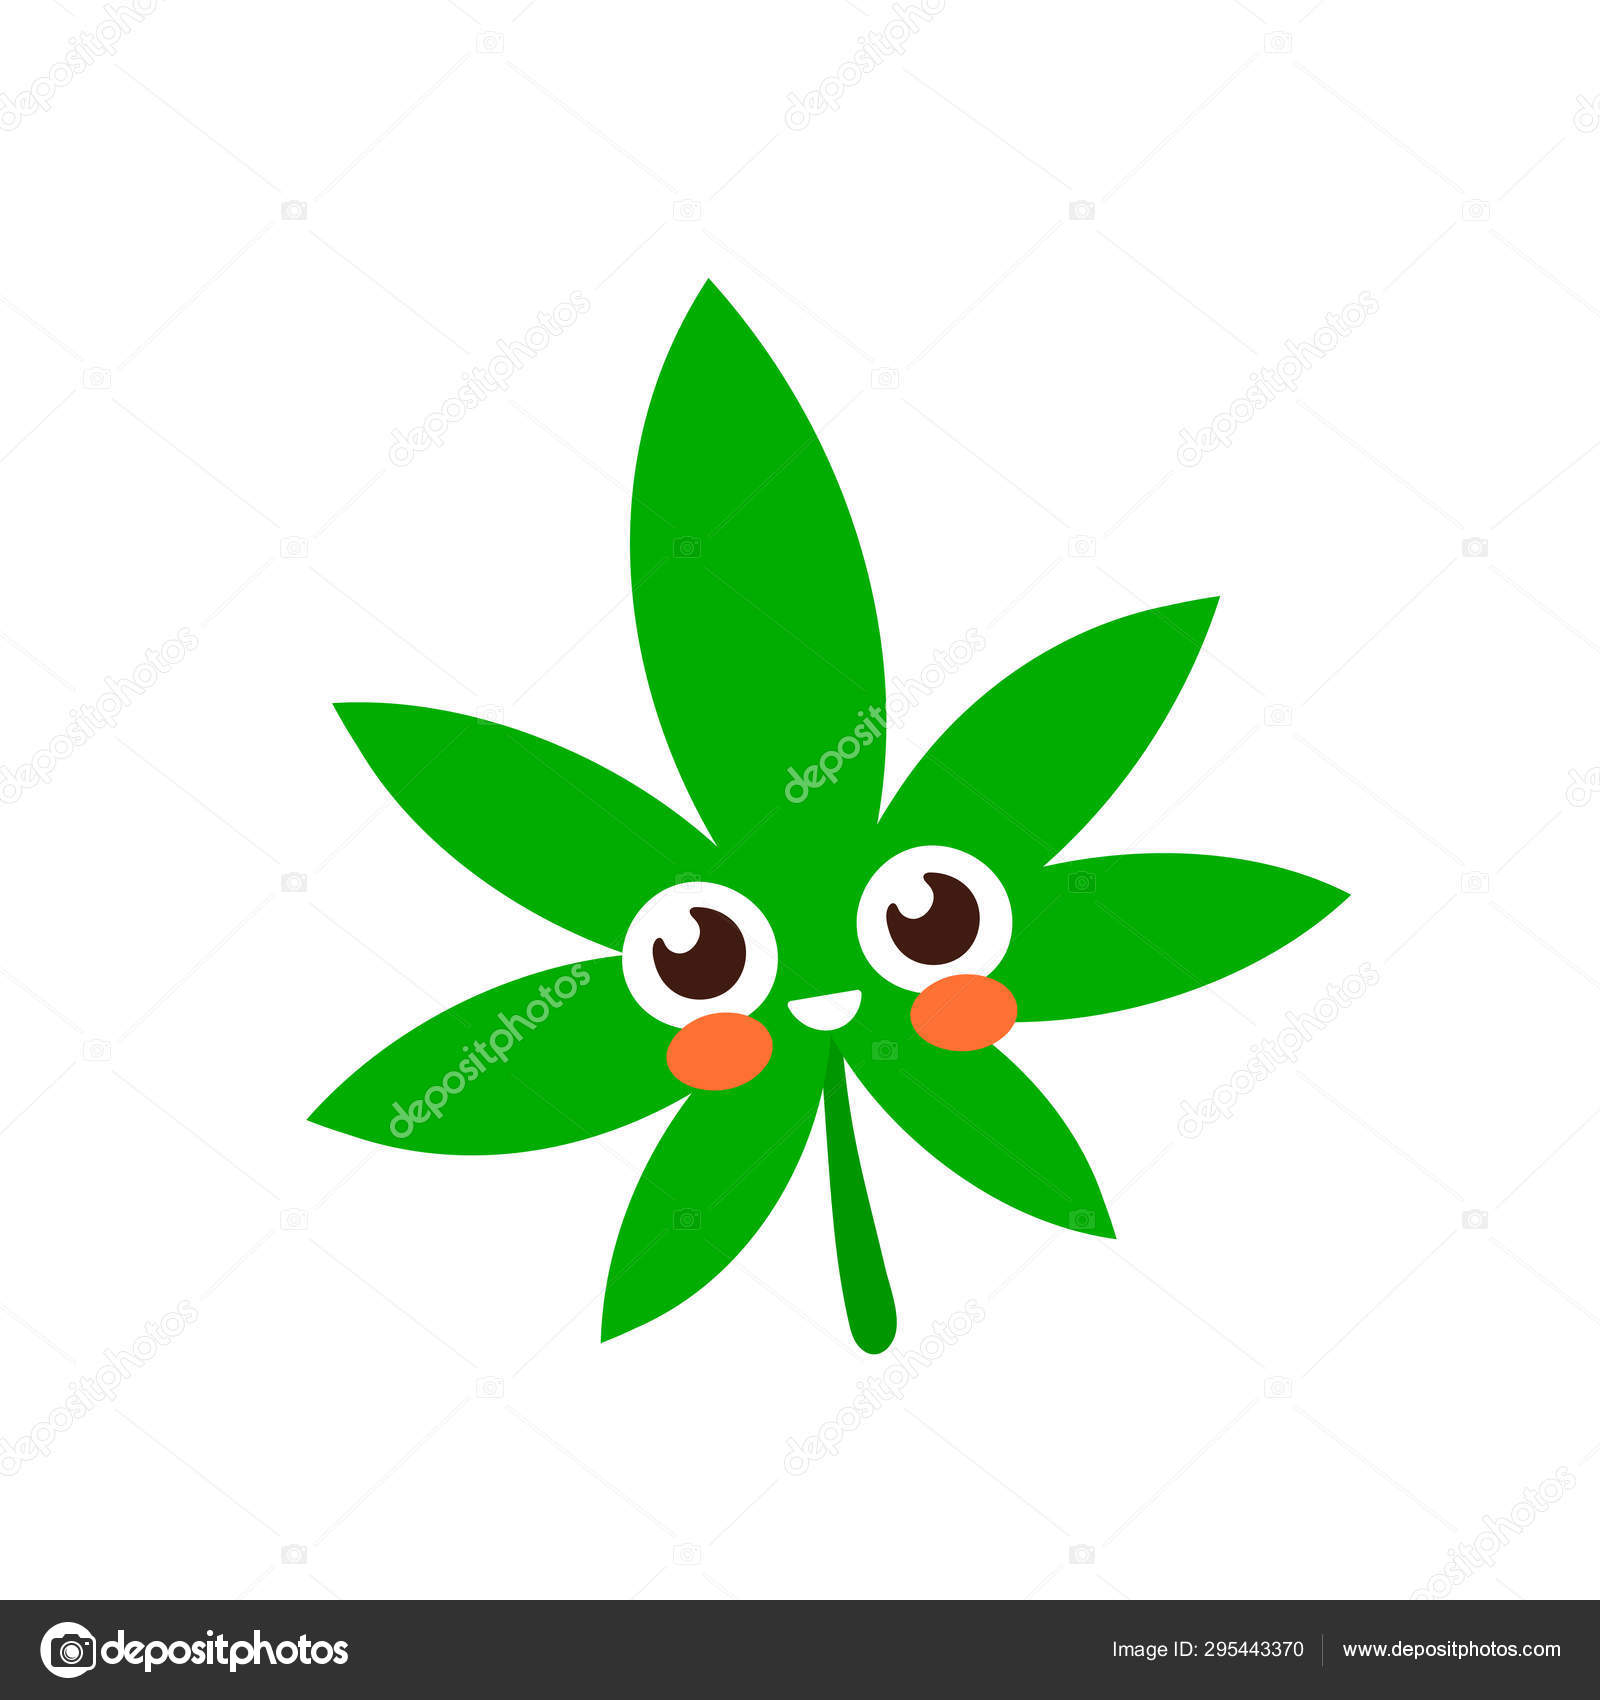 Personaje de dibujos animados comic marihuana imágenes de stock de arte  vectorial | Depositphotos